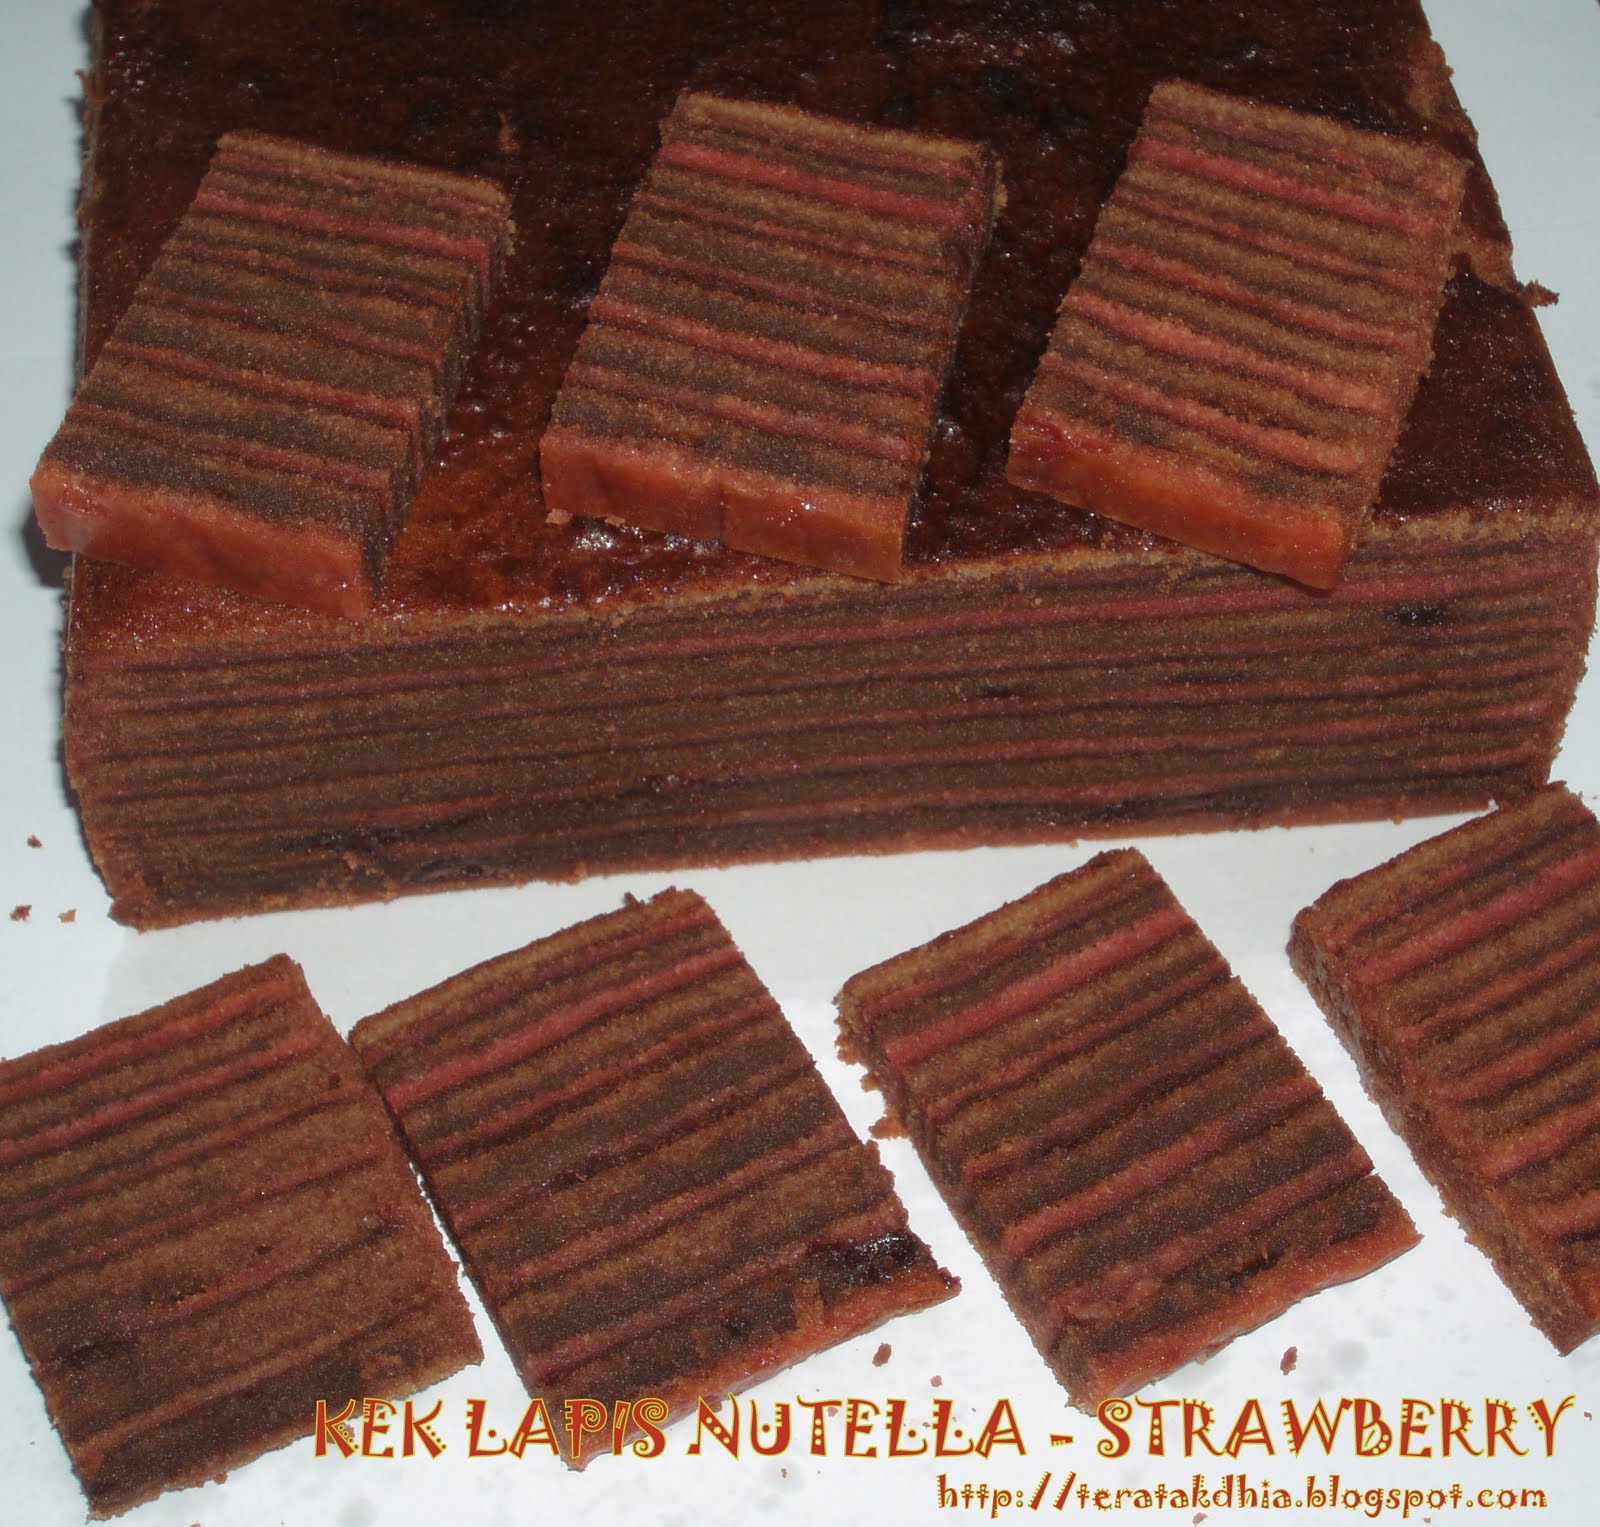 Yuslindhia Zamani: Kek Lapis Nutella - Strawberry